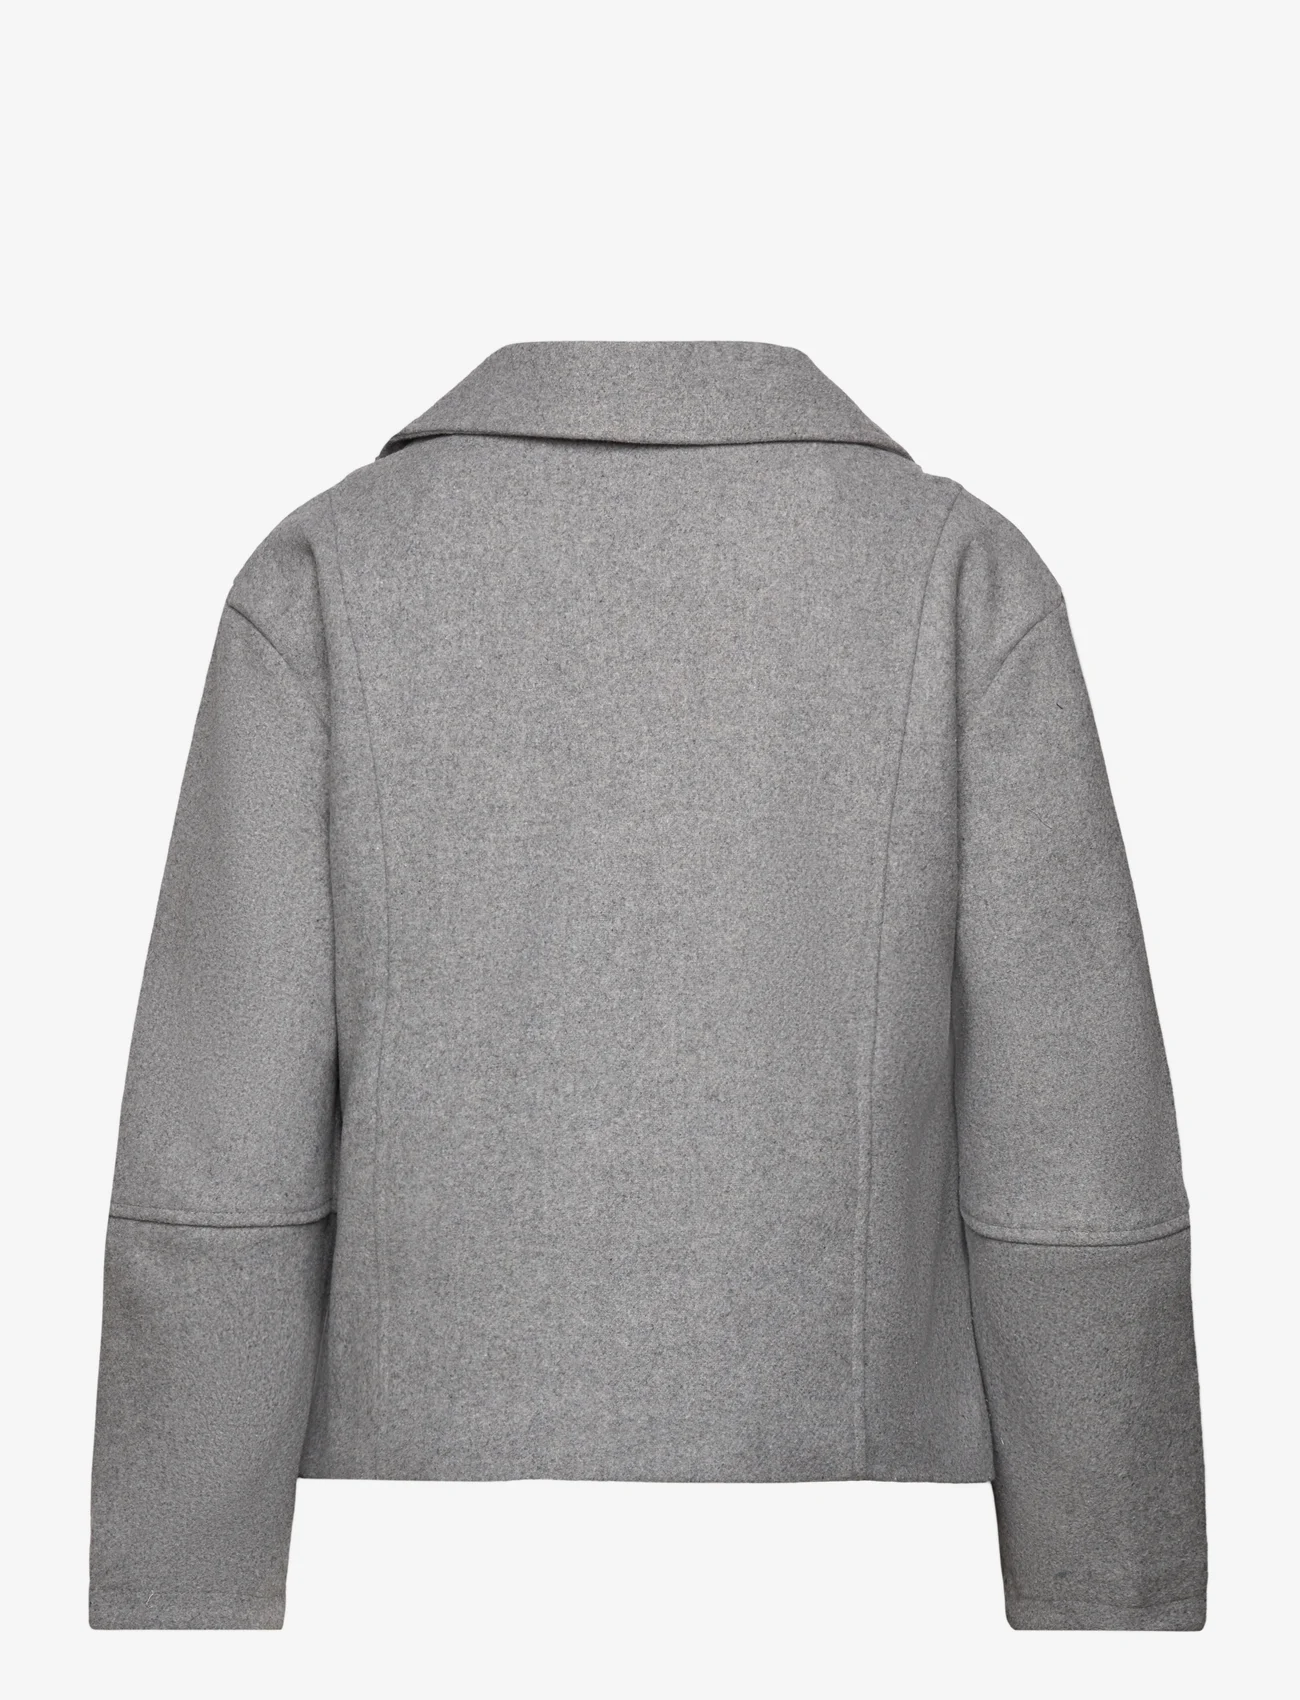 Rosemunde - Wool jacket - wool jackets - light grey melange - 1